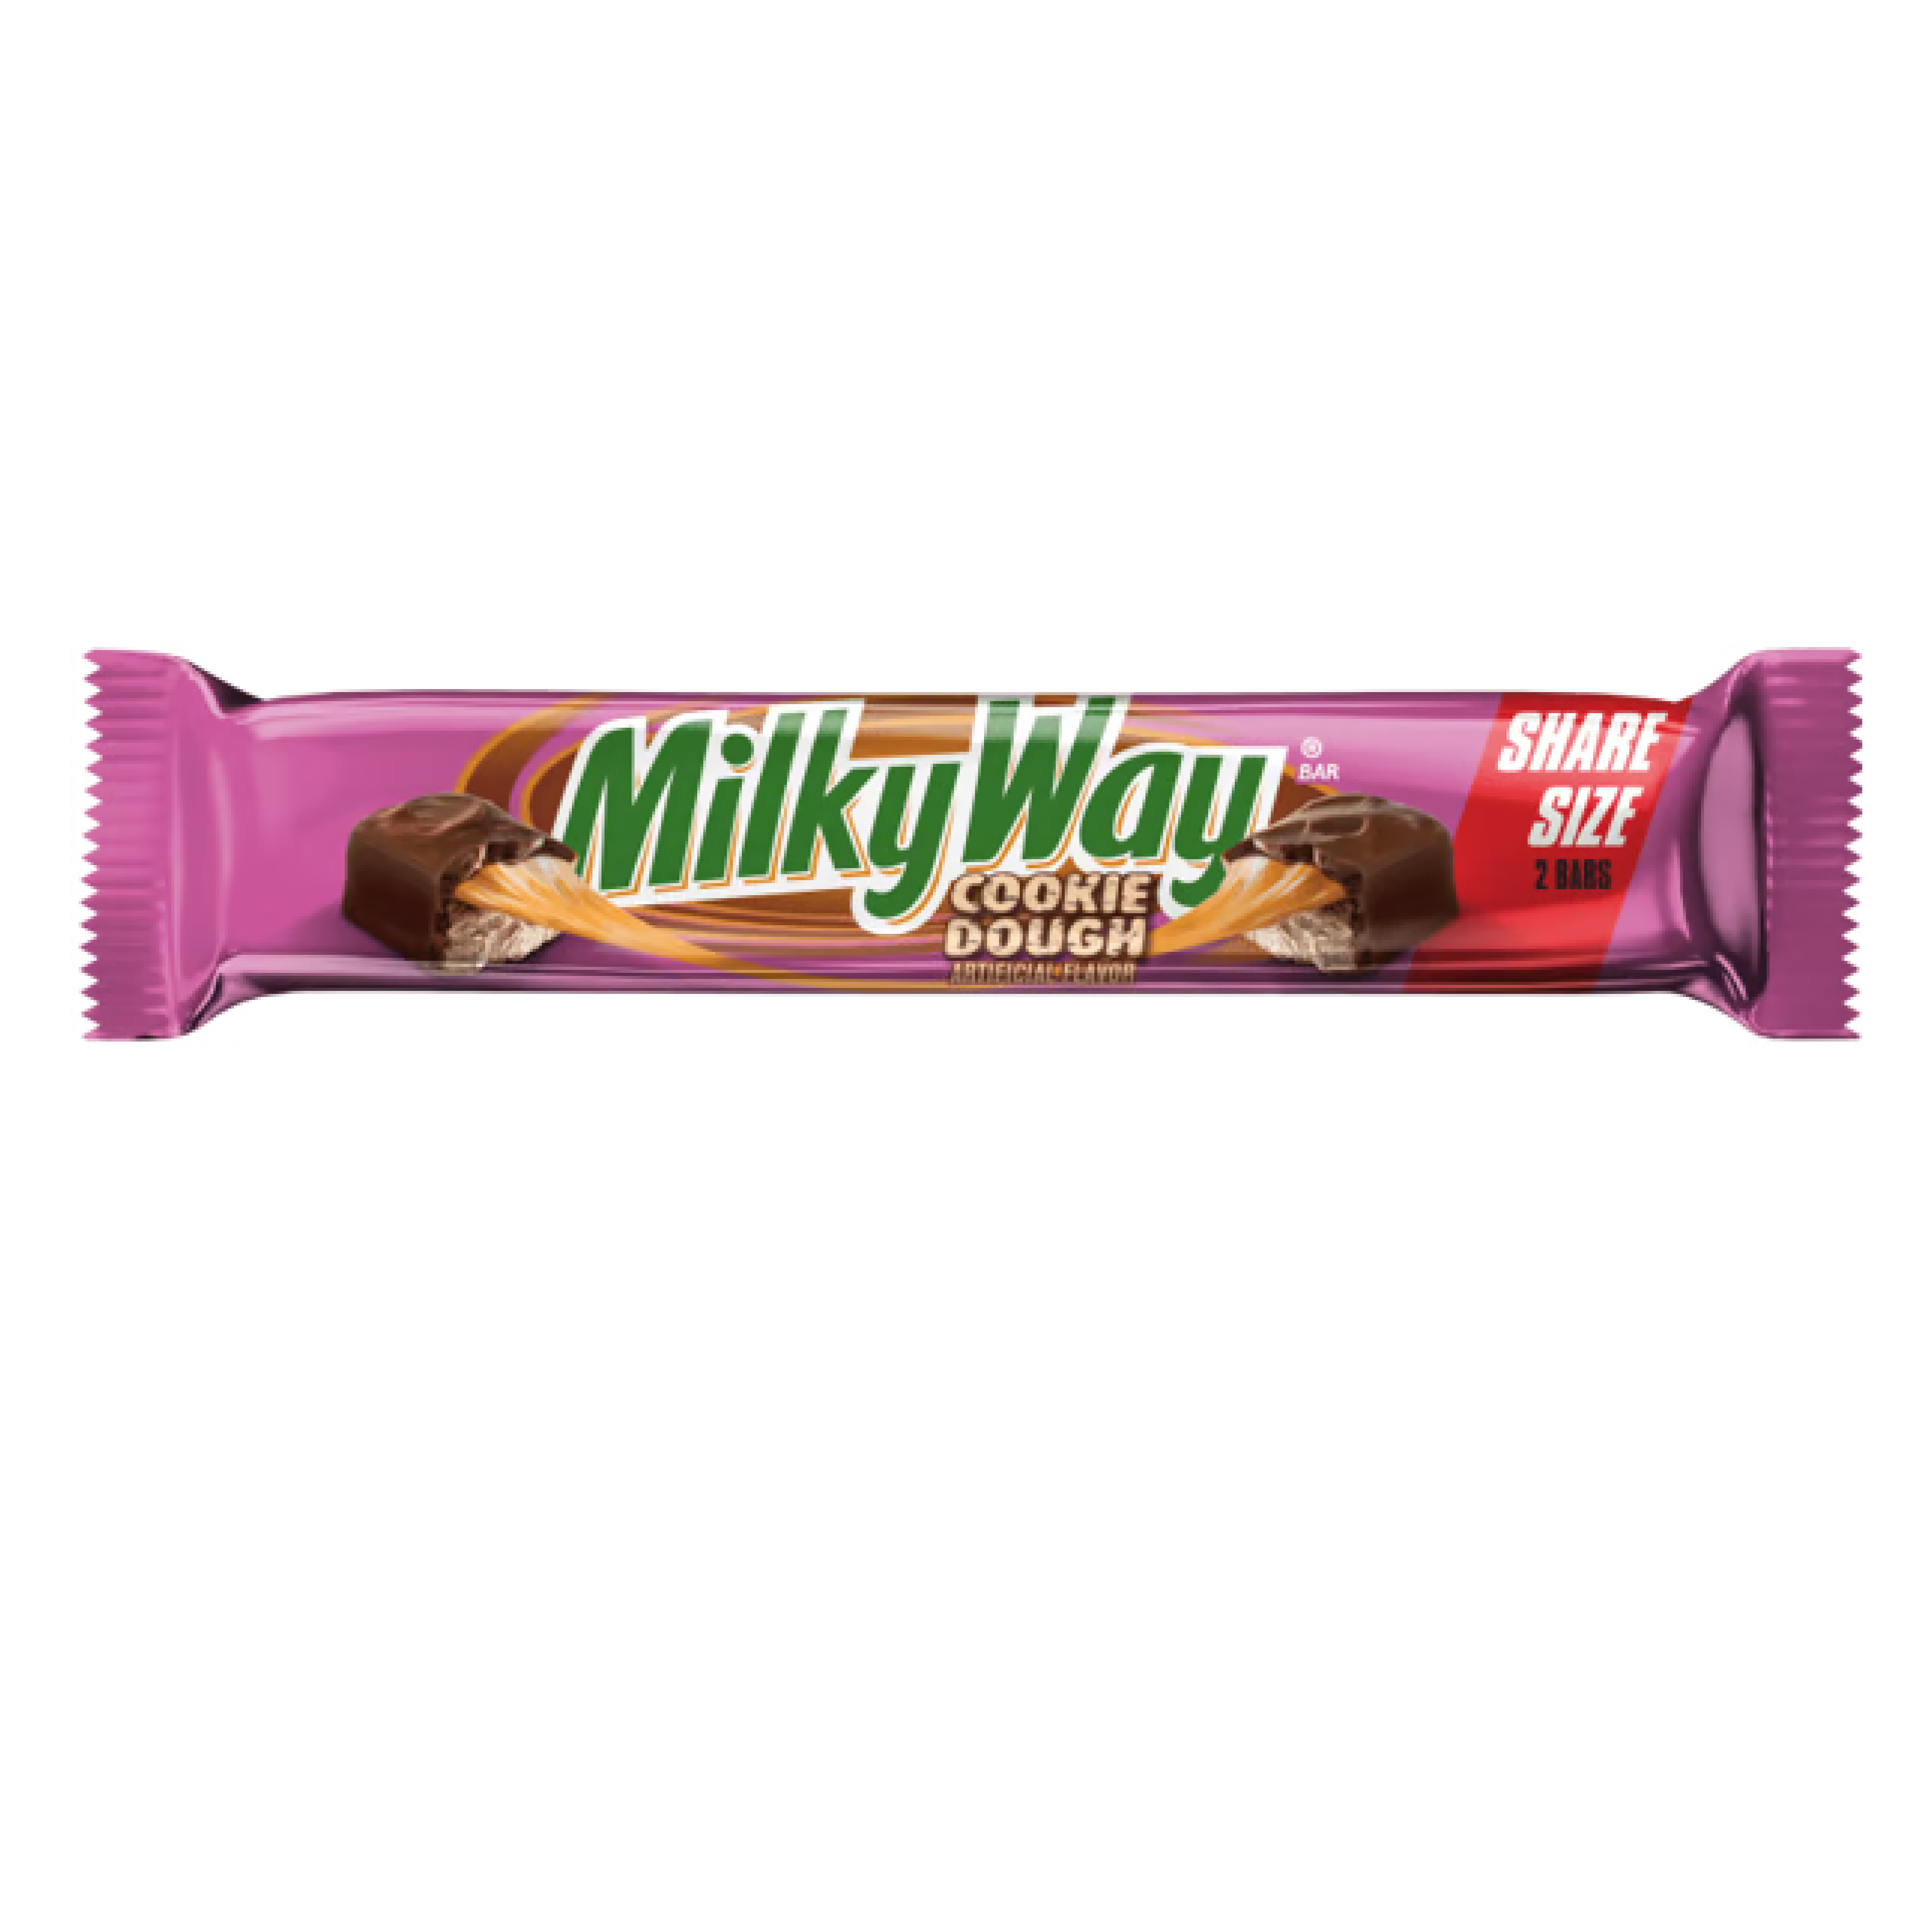 Milky Way Cookie Dough Share Size Bar 3.16 oz